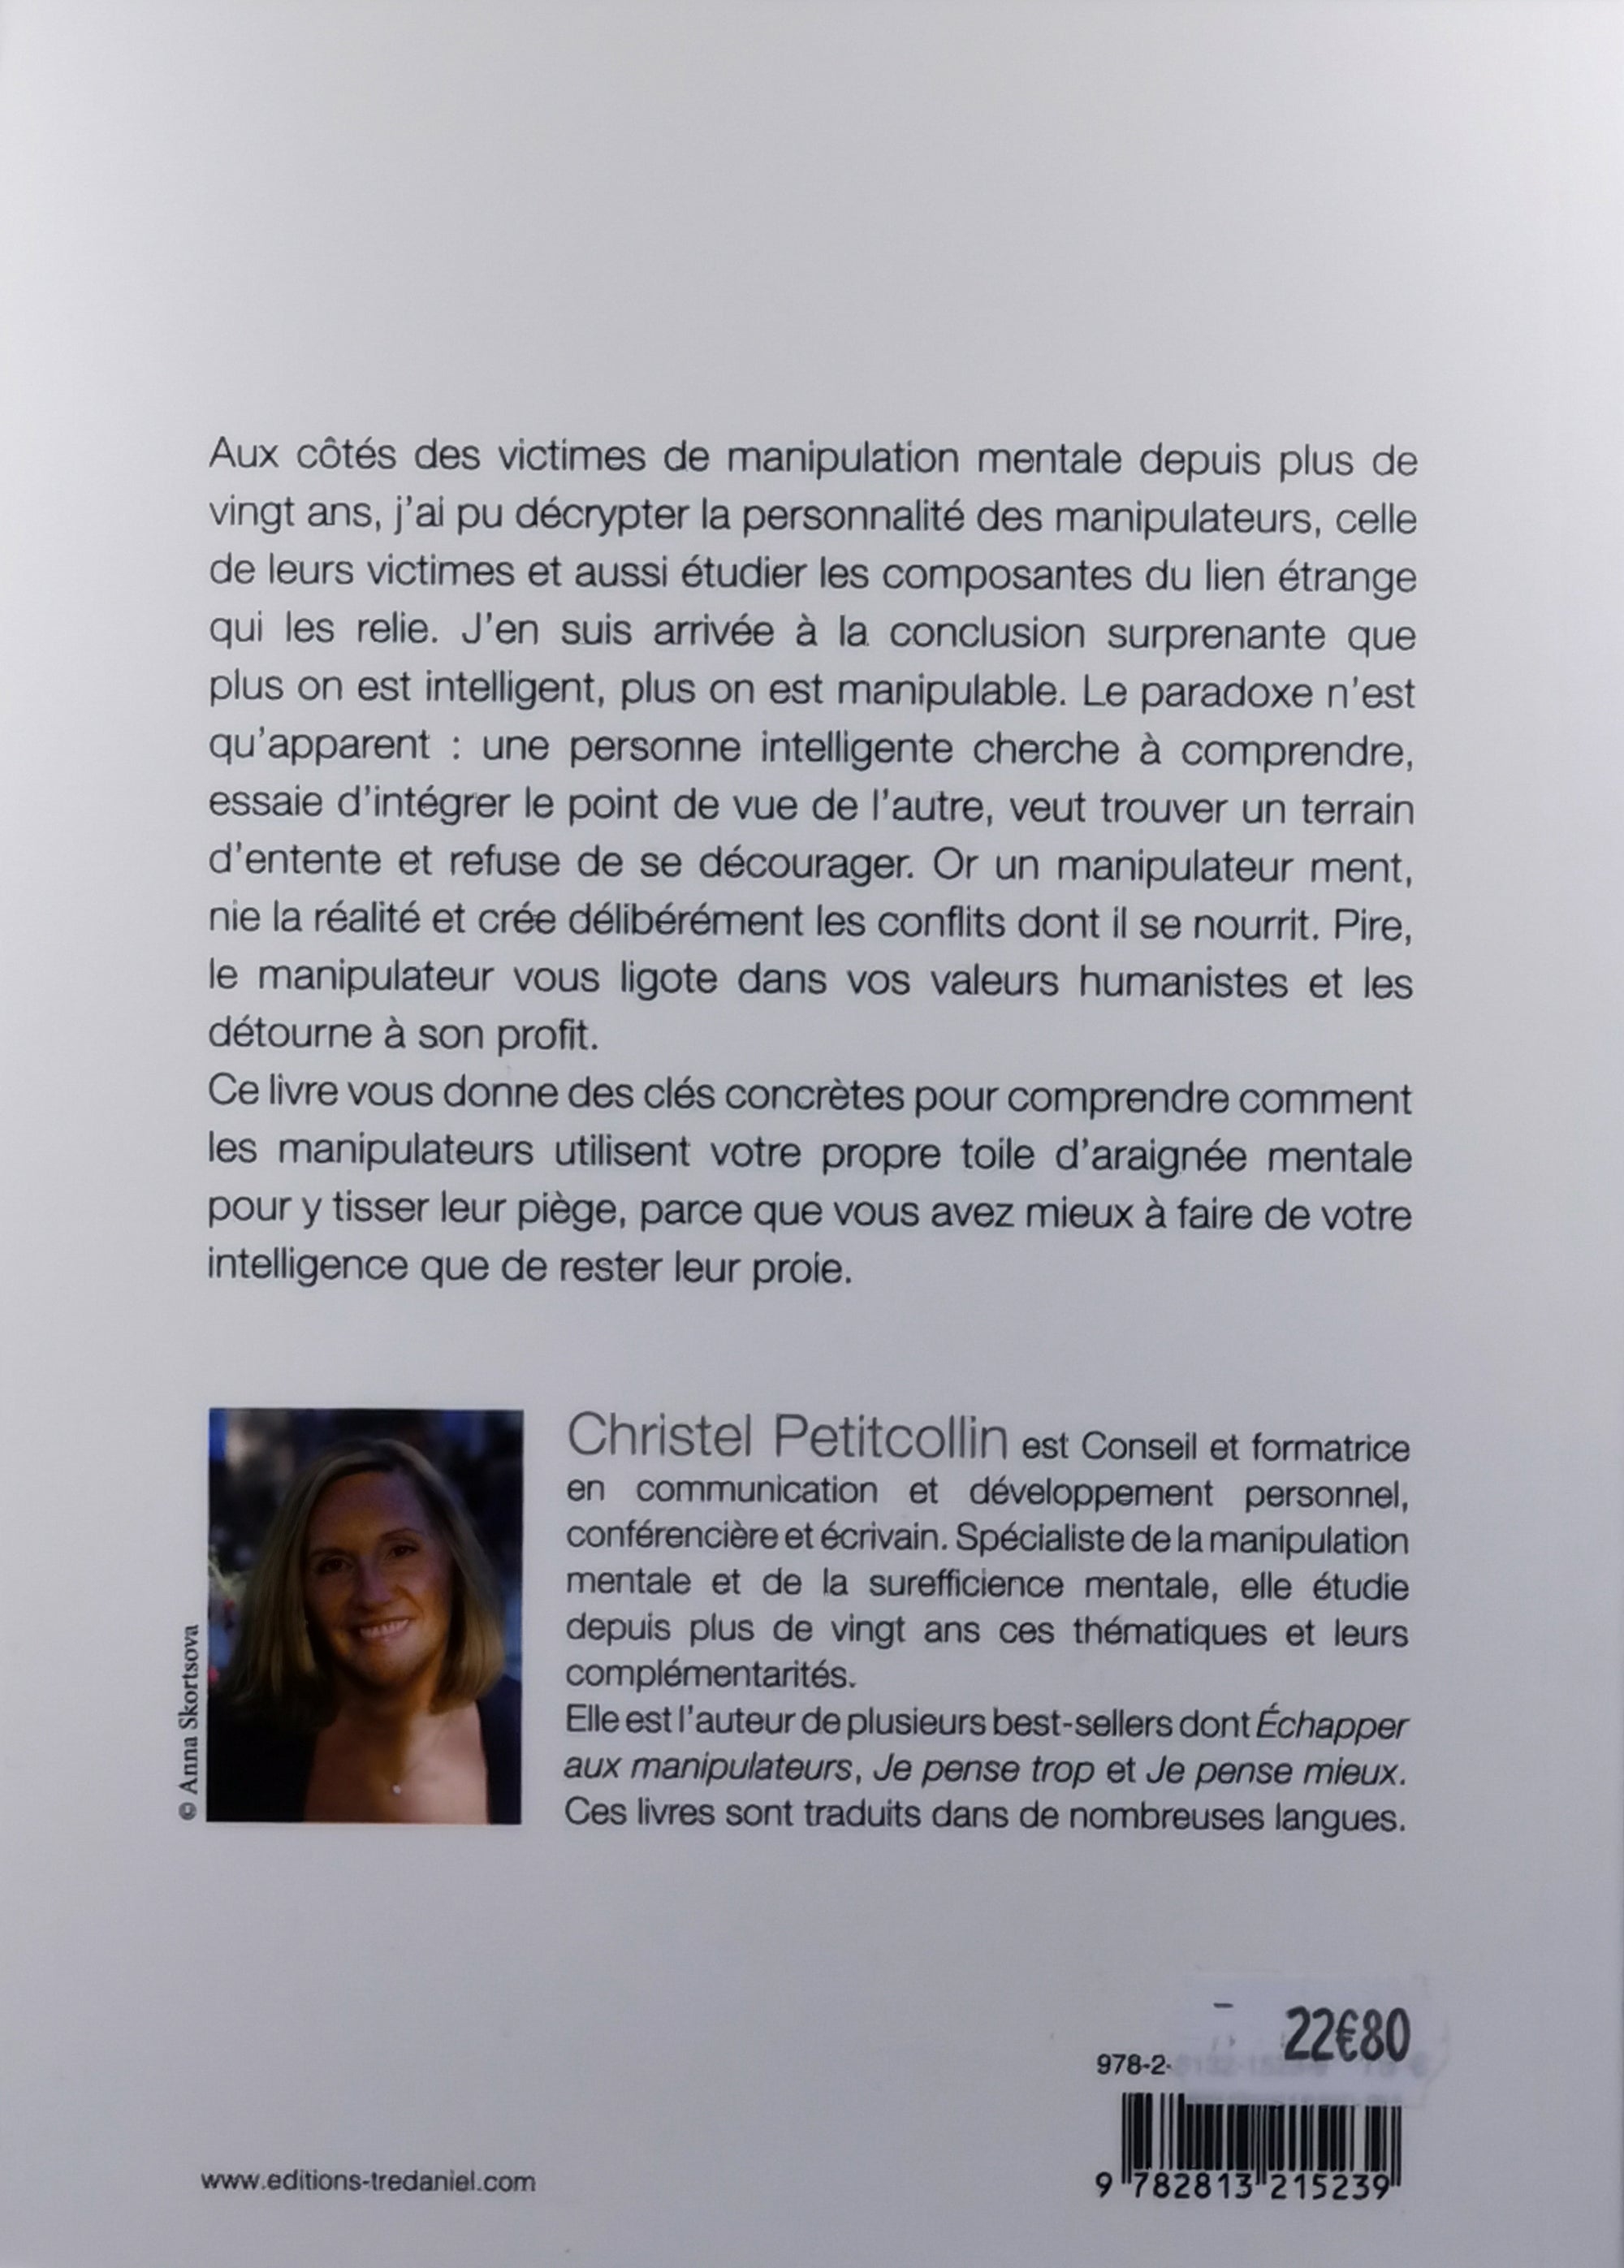 Je pense trop - Christel Petitcollin - La palette a bijoux